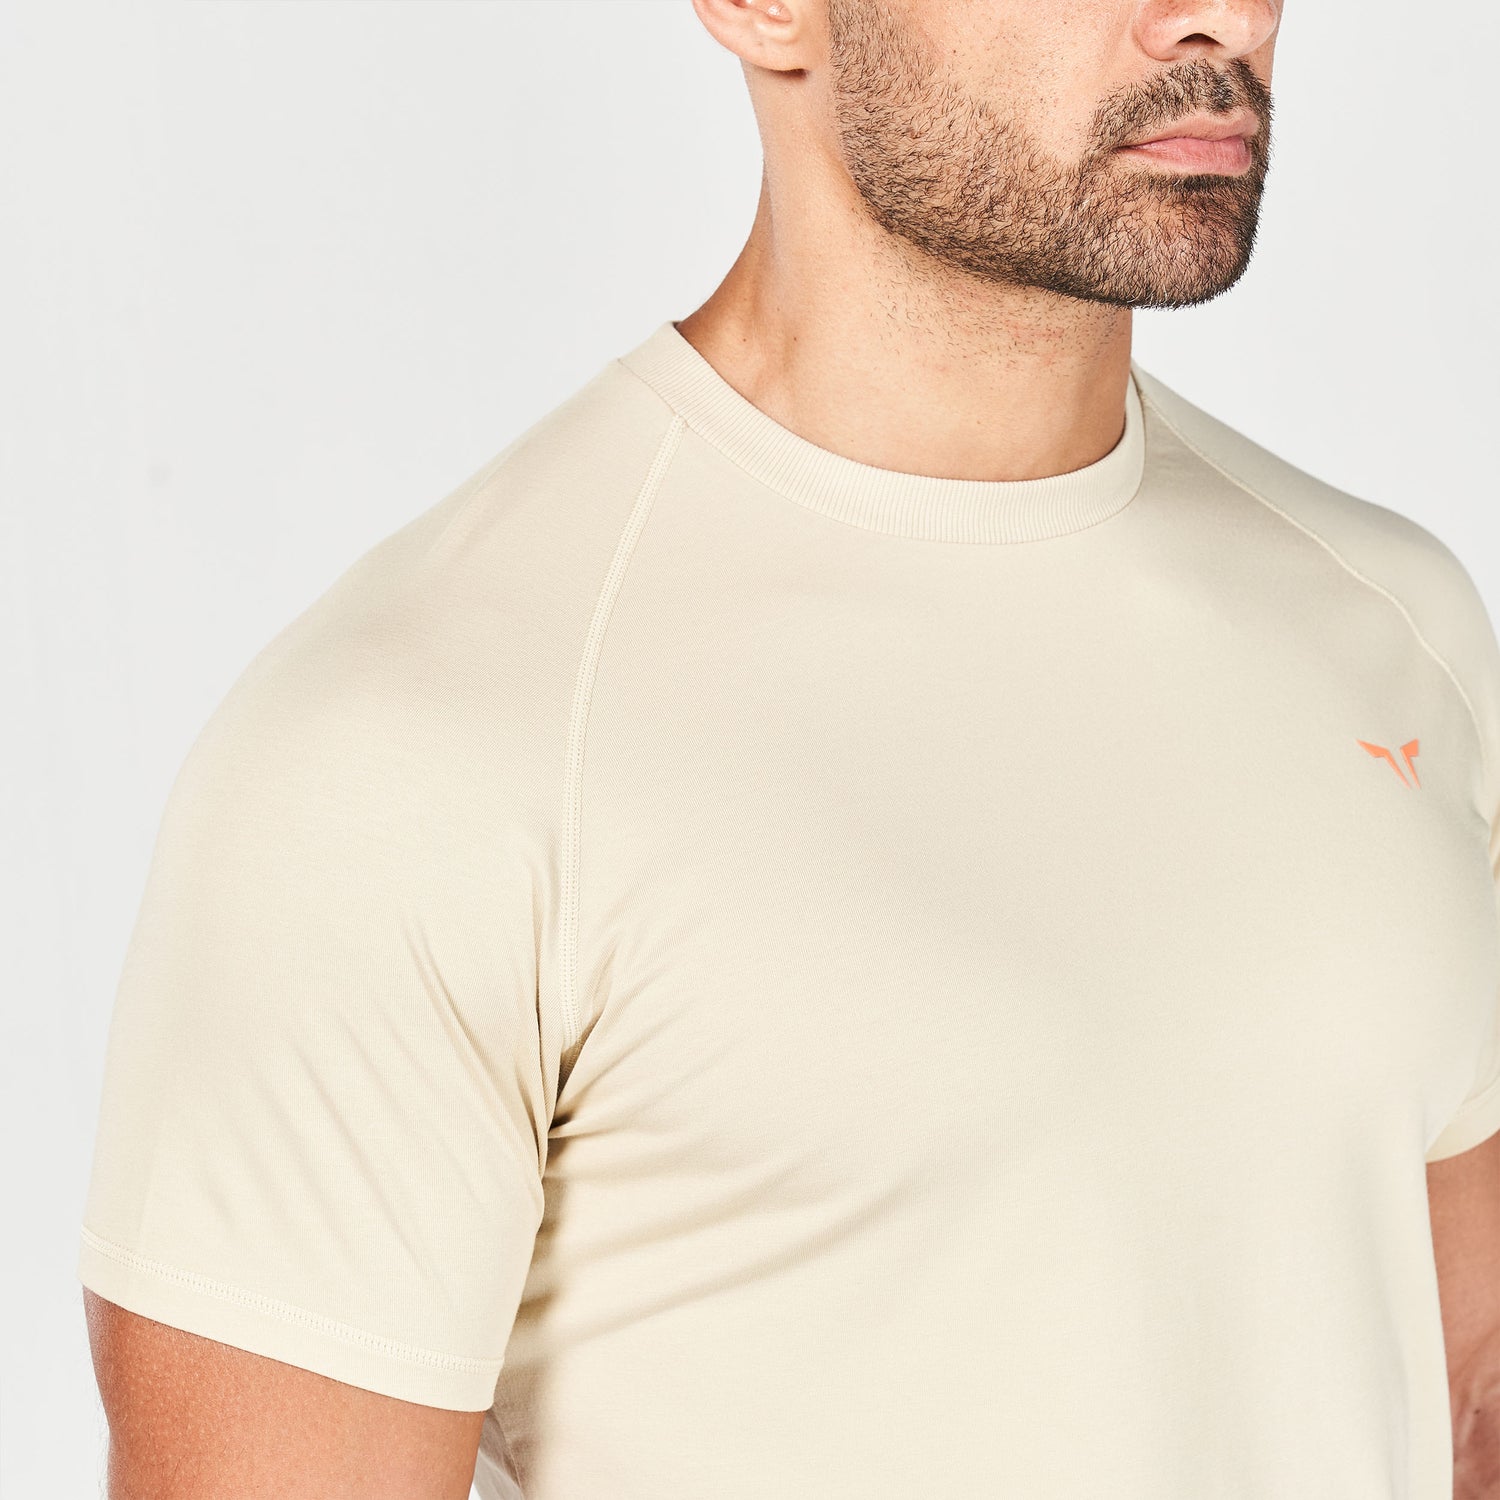 squatwolf-gym-wear-golden-era-raglan-muscle-tee-brown-rice-workout-shirts-for-men